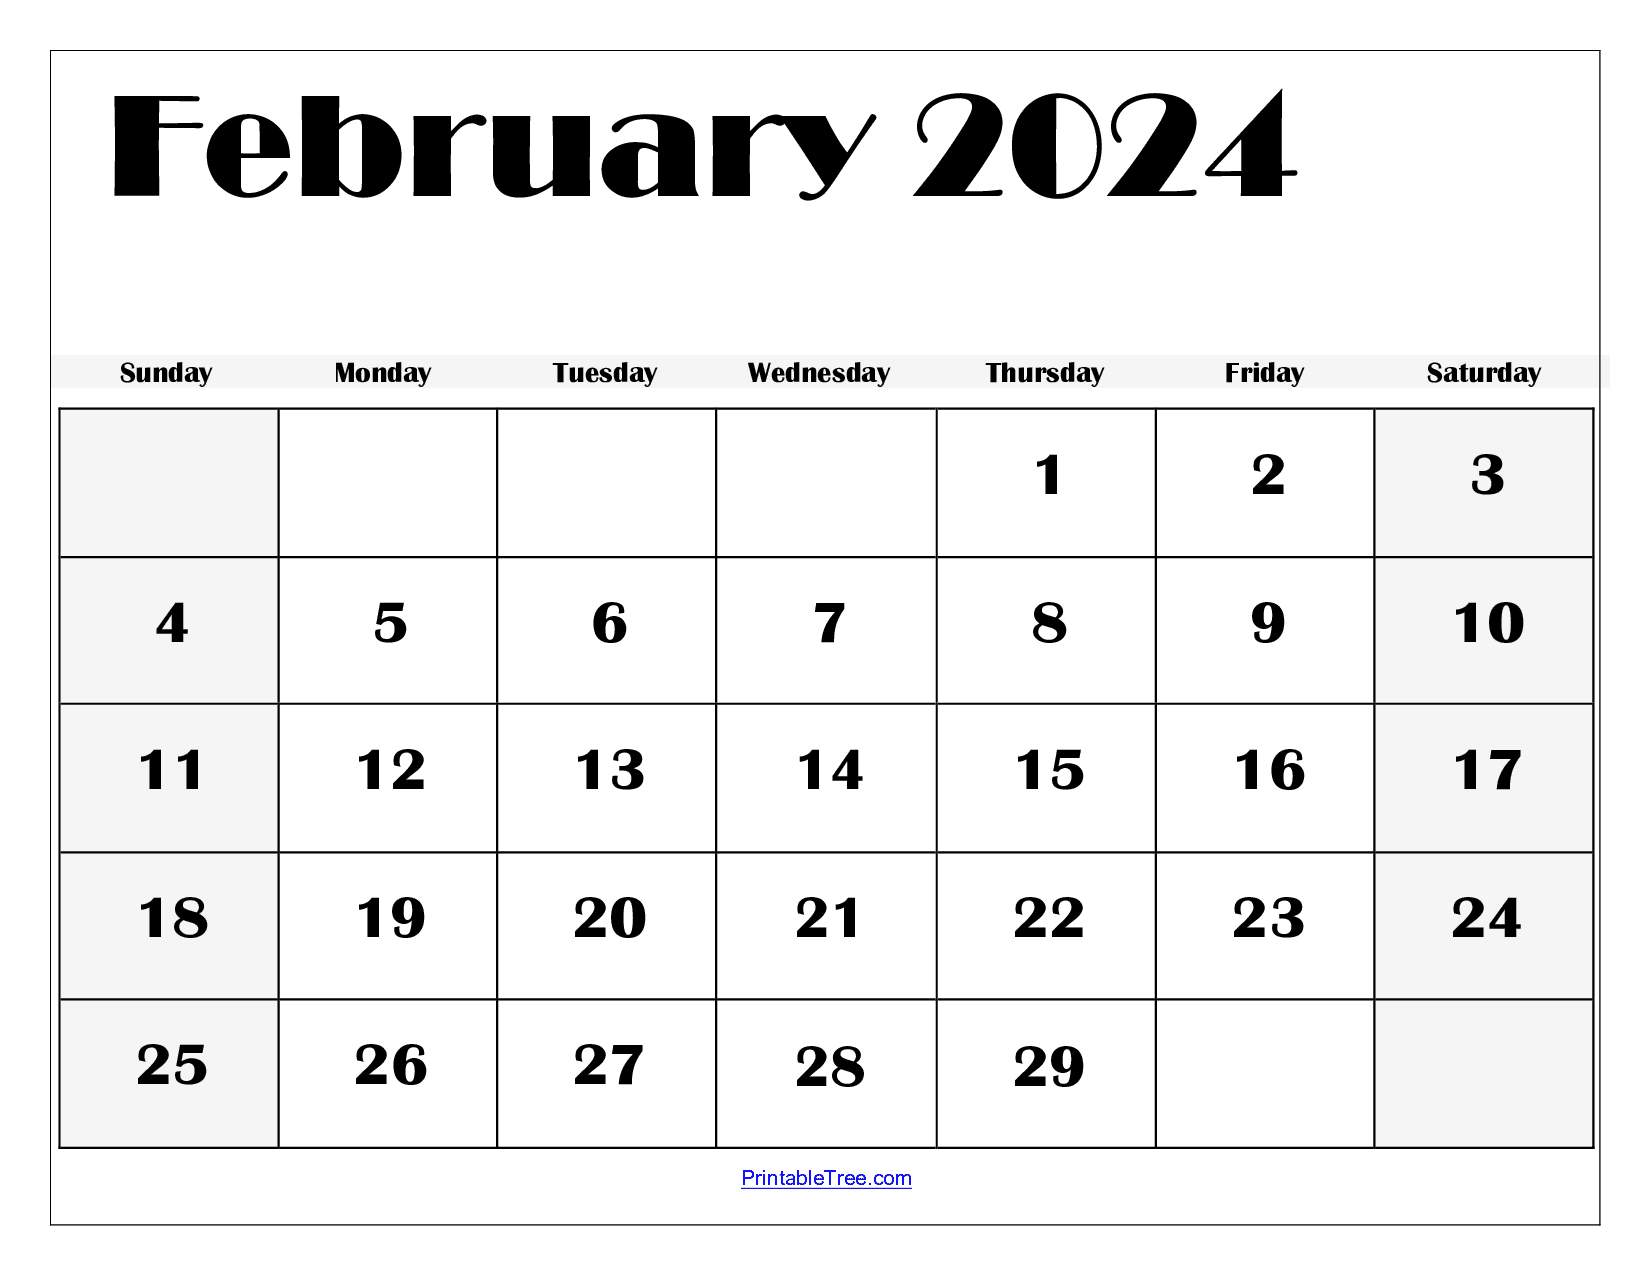 February 2024 Calendar Printable Pdf Template With Holidays for February 2024 Calendar Free Printable